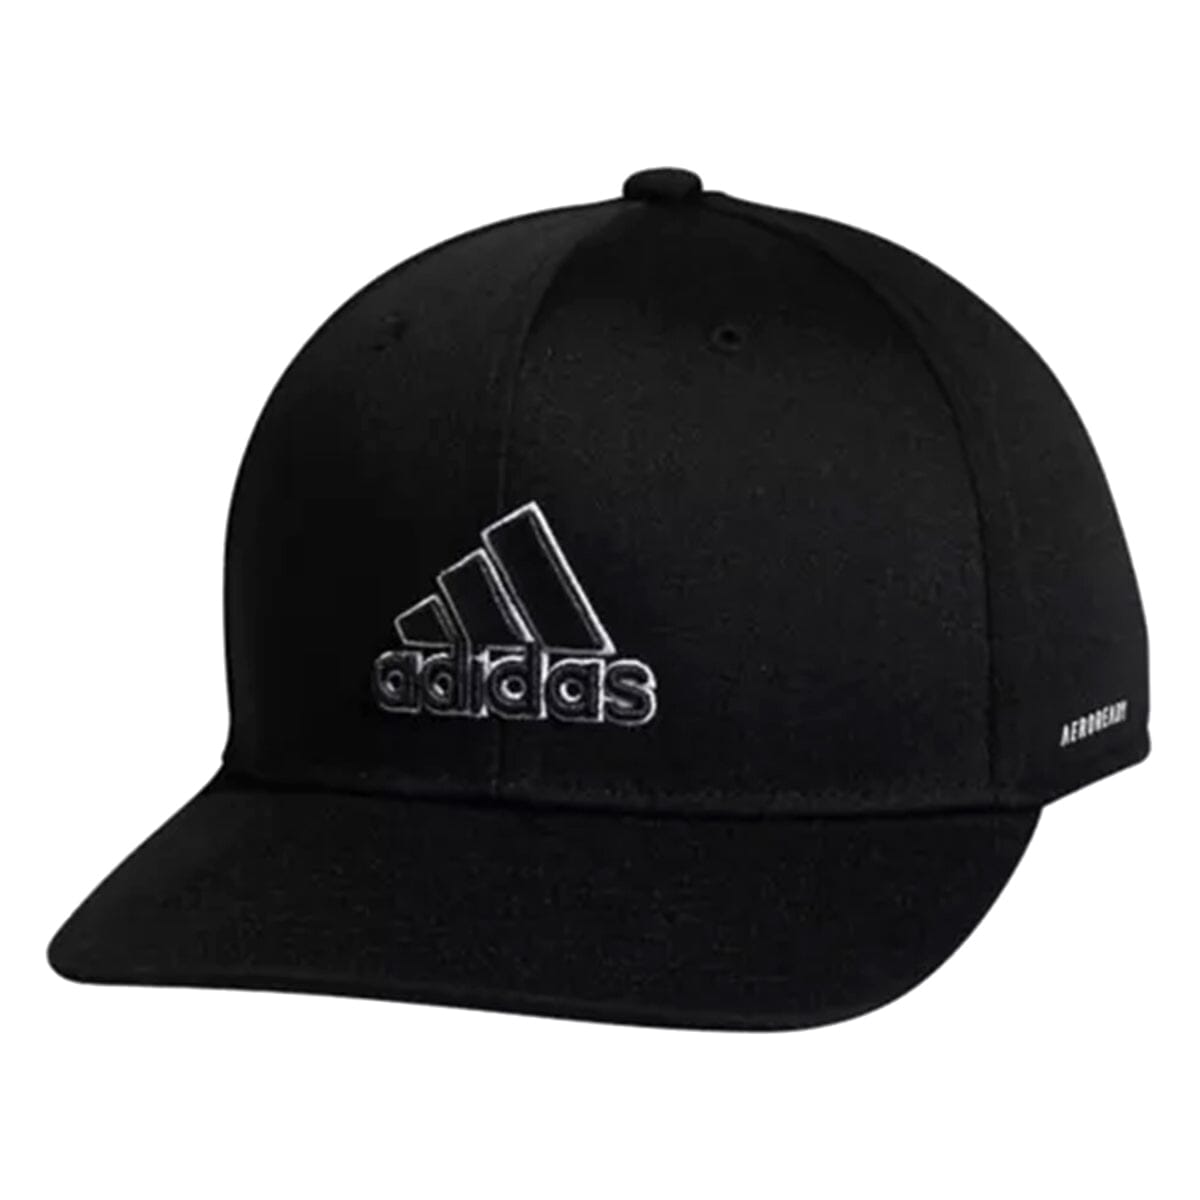 Adidas Men's Excel Performance Snapback Hat, Black/White/Grey